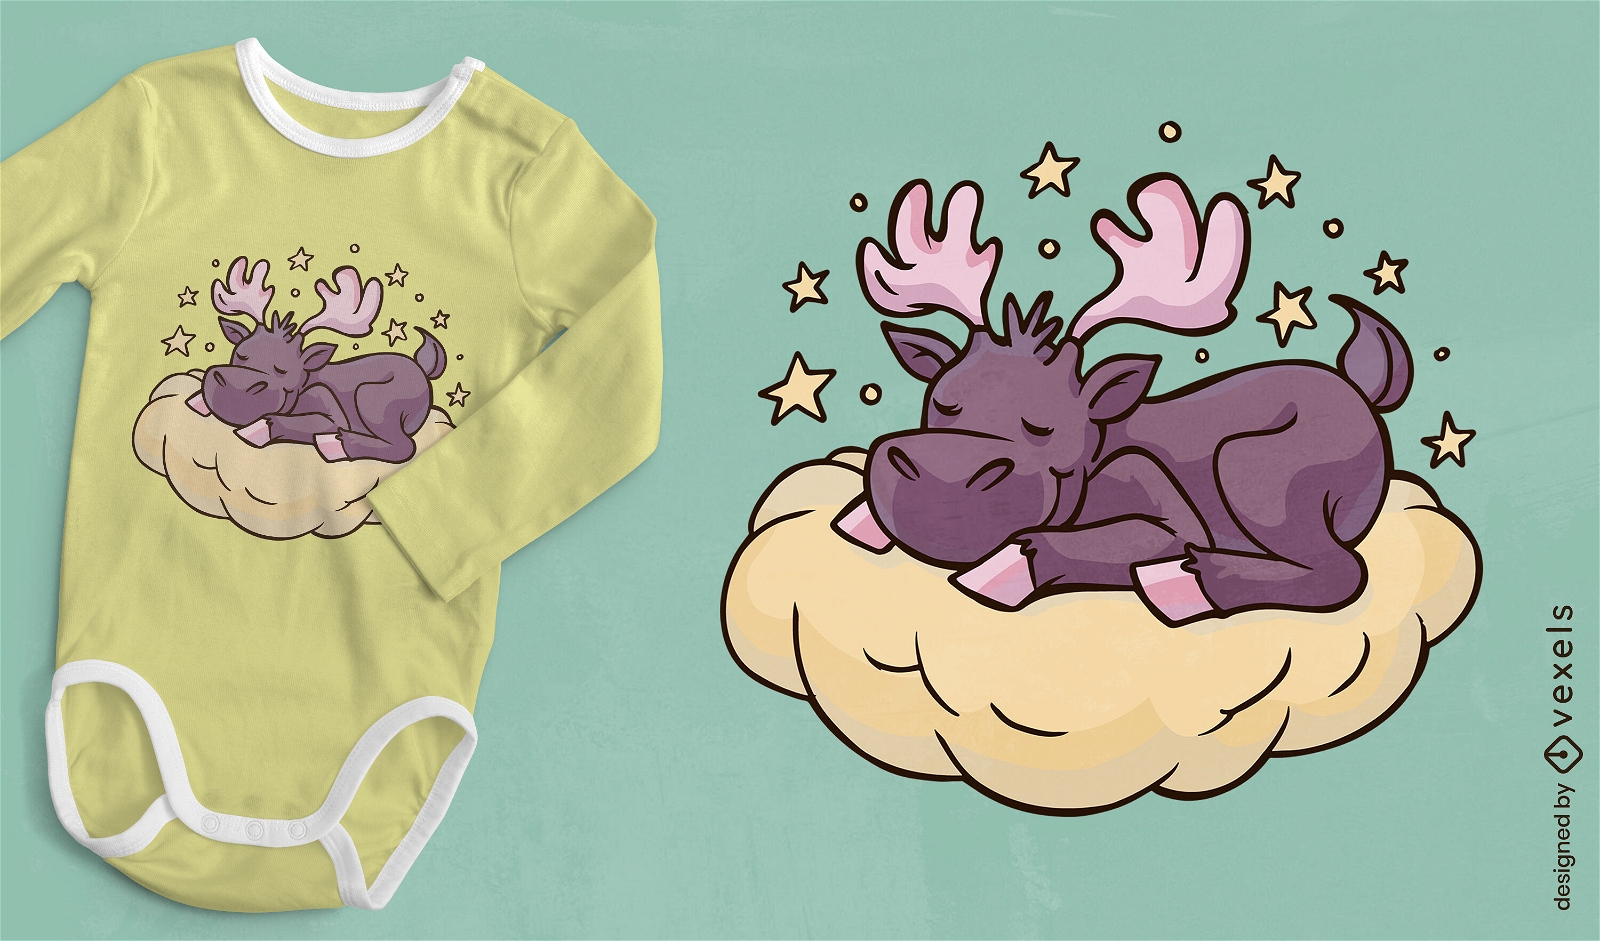 Cute moose animal sleeping t-shirt design